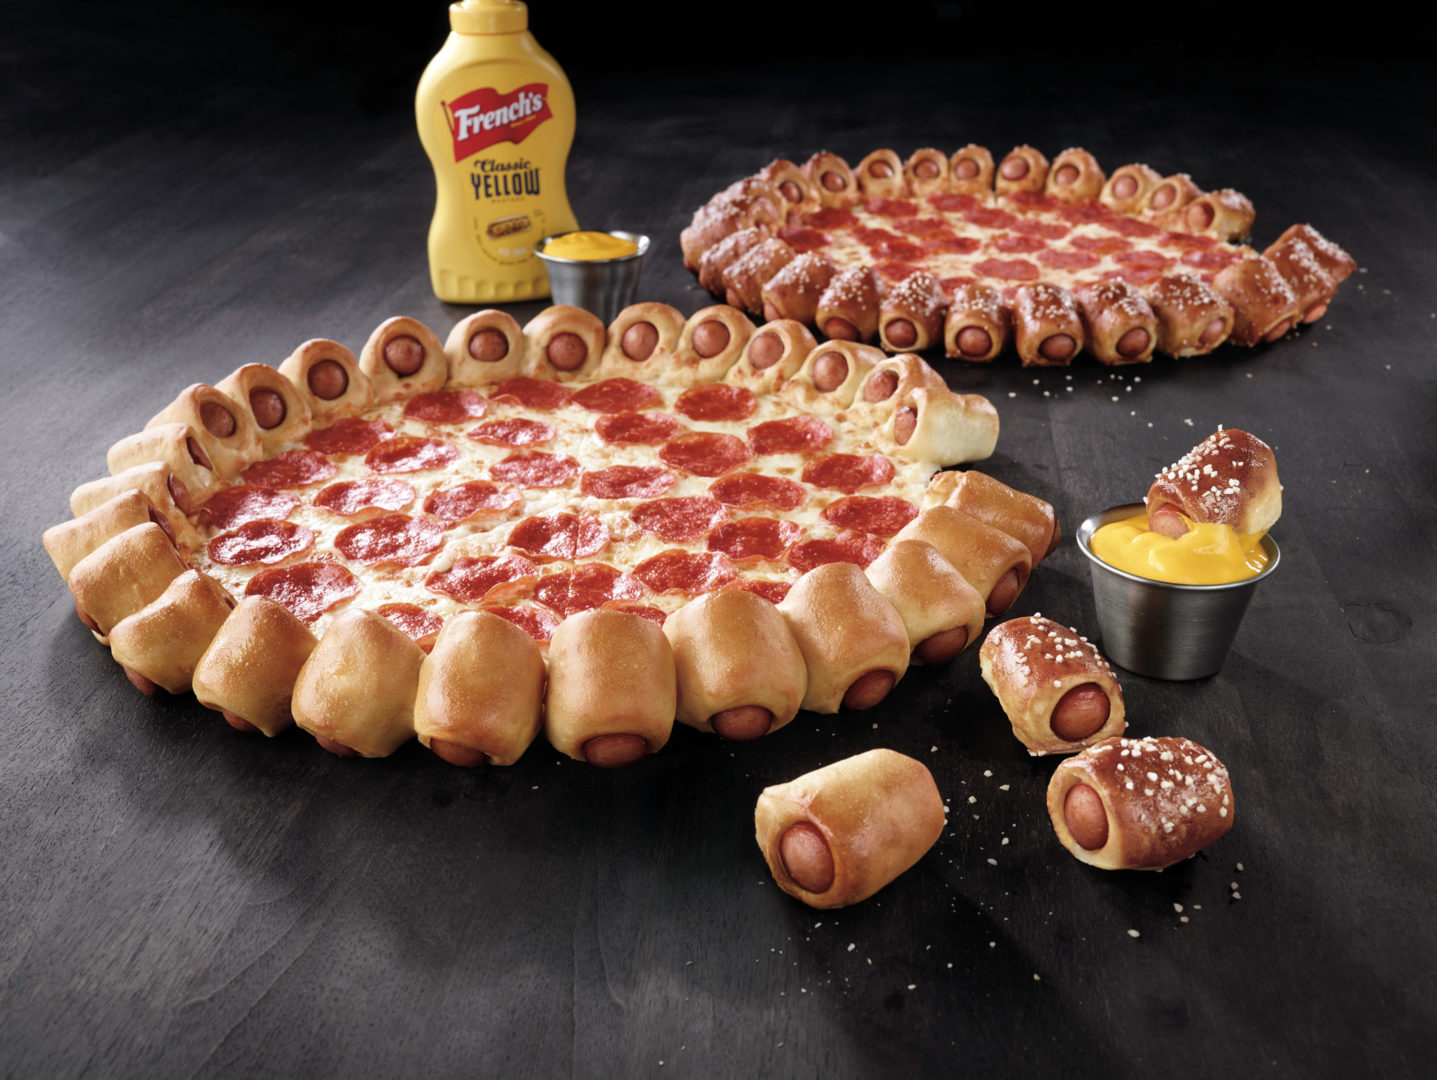 pizza-hut-hot-dog